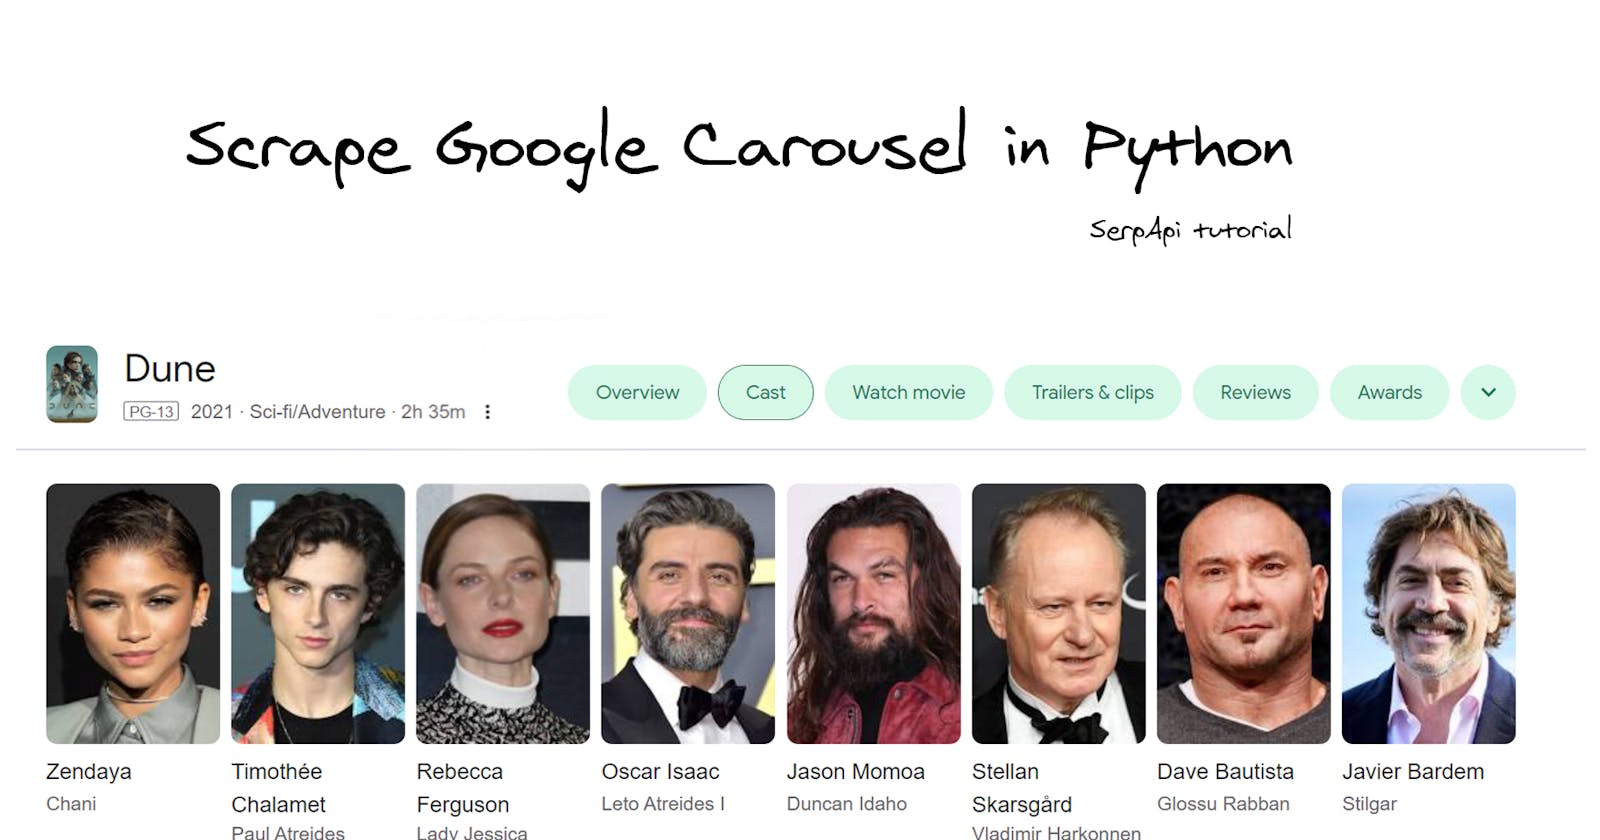 Scrape Google Carousel Results in Python